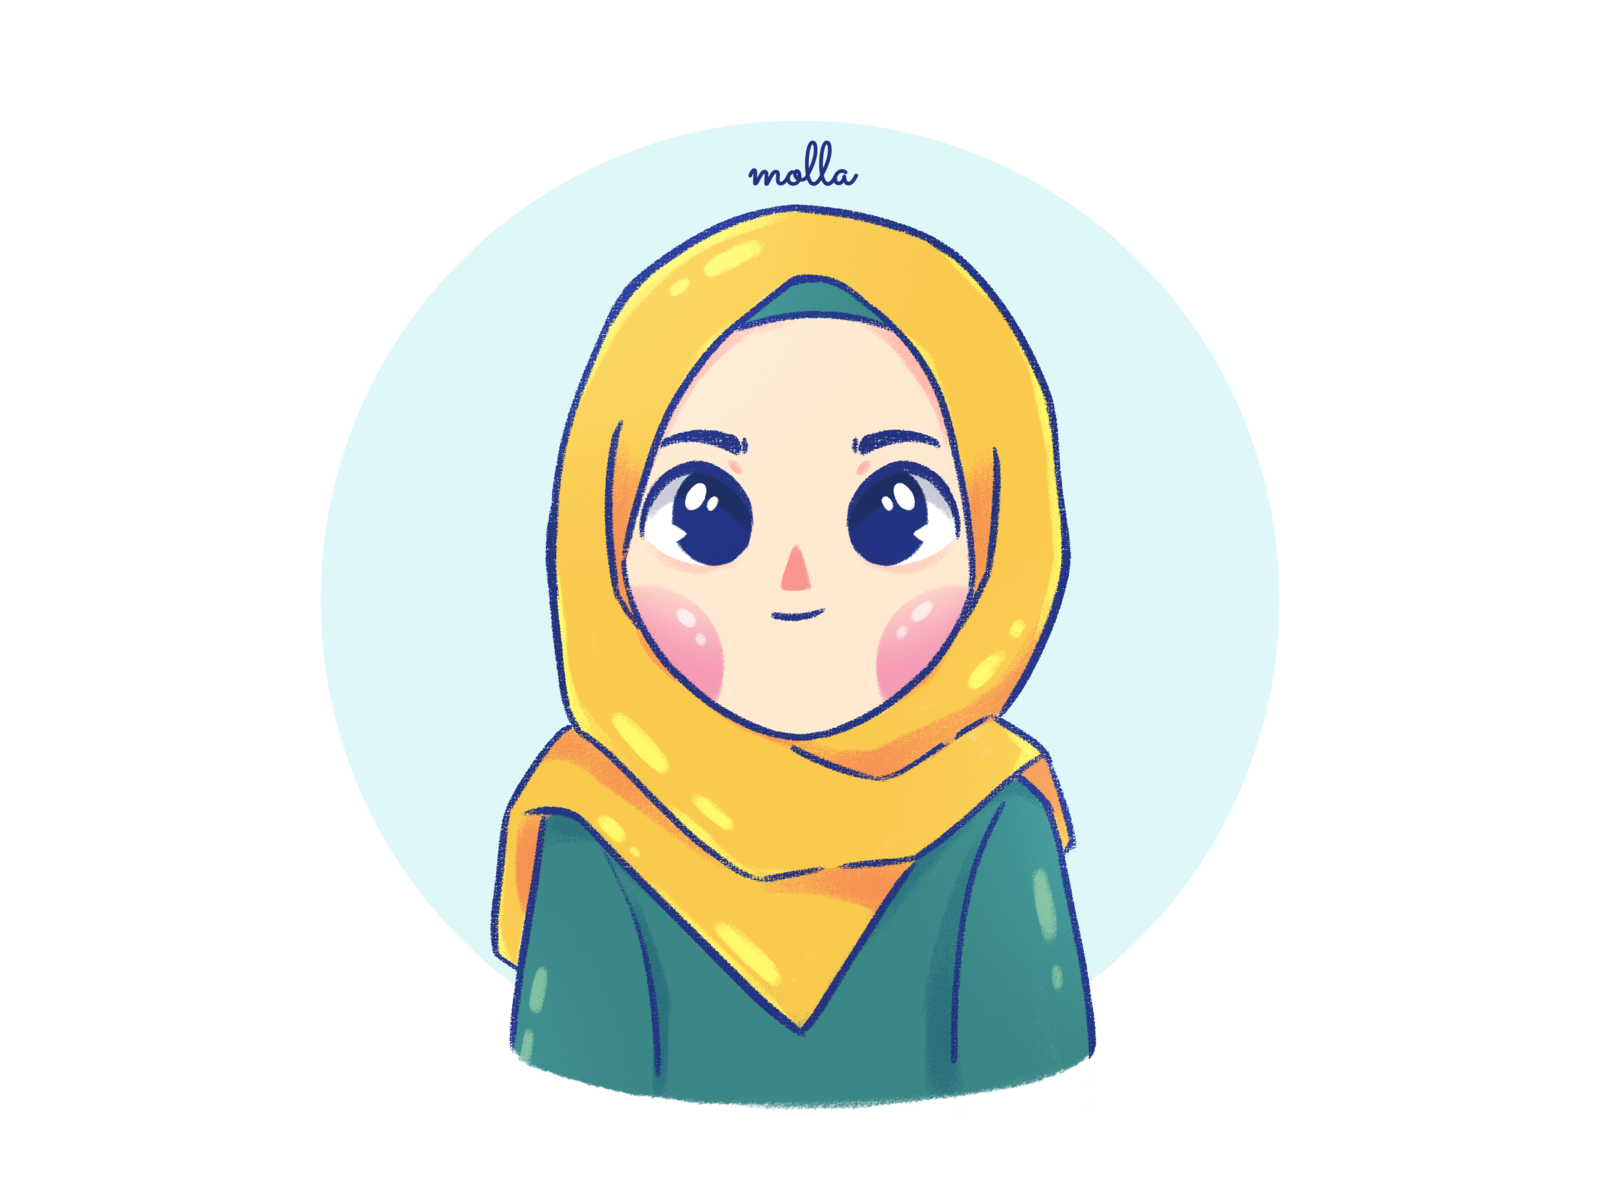 Super Duper Cute Hijab Girl Cartoon Portrait by Angga Indratama on Dribbble